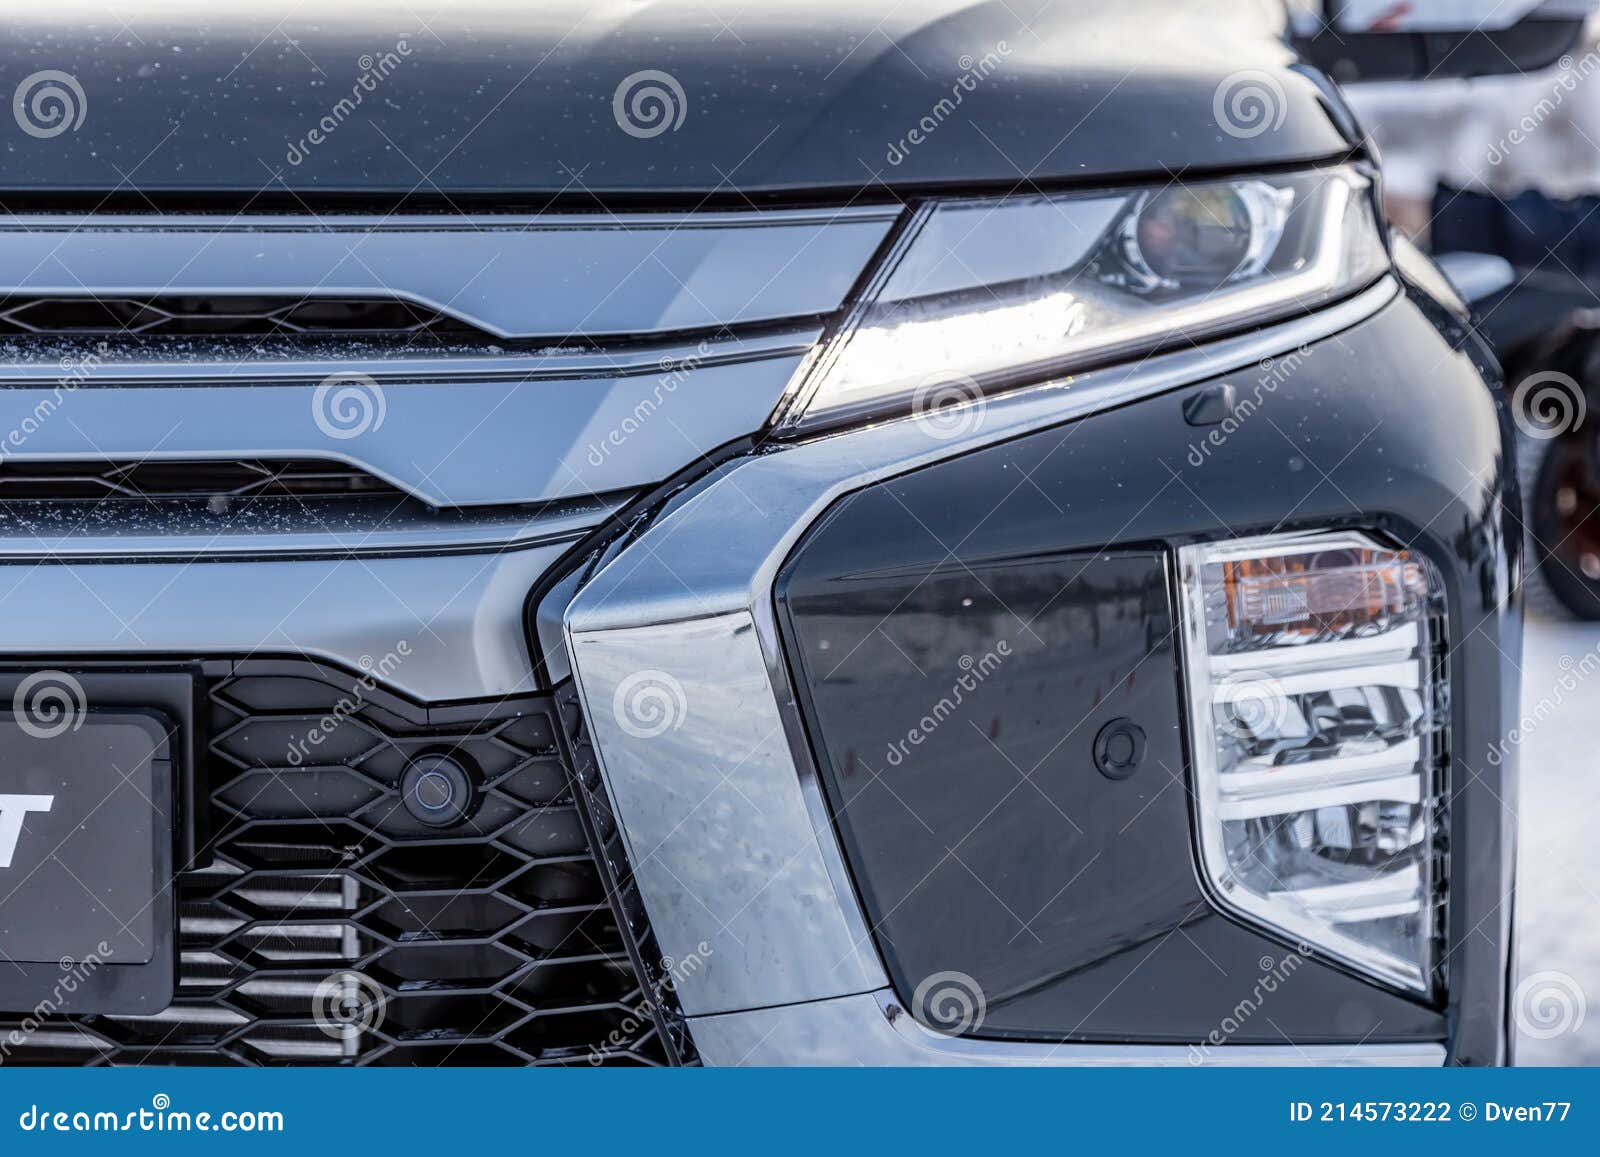 Moscow, Russia - February 17, 2021: All new Mitsubishi Pajero